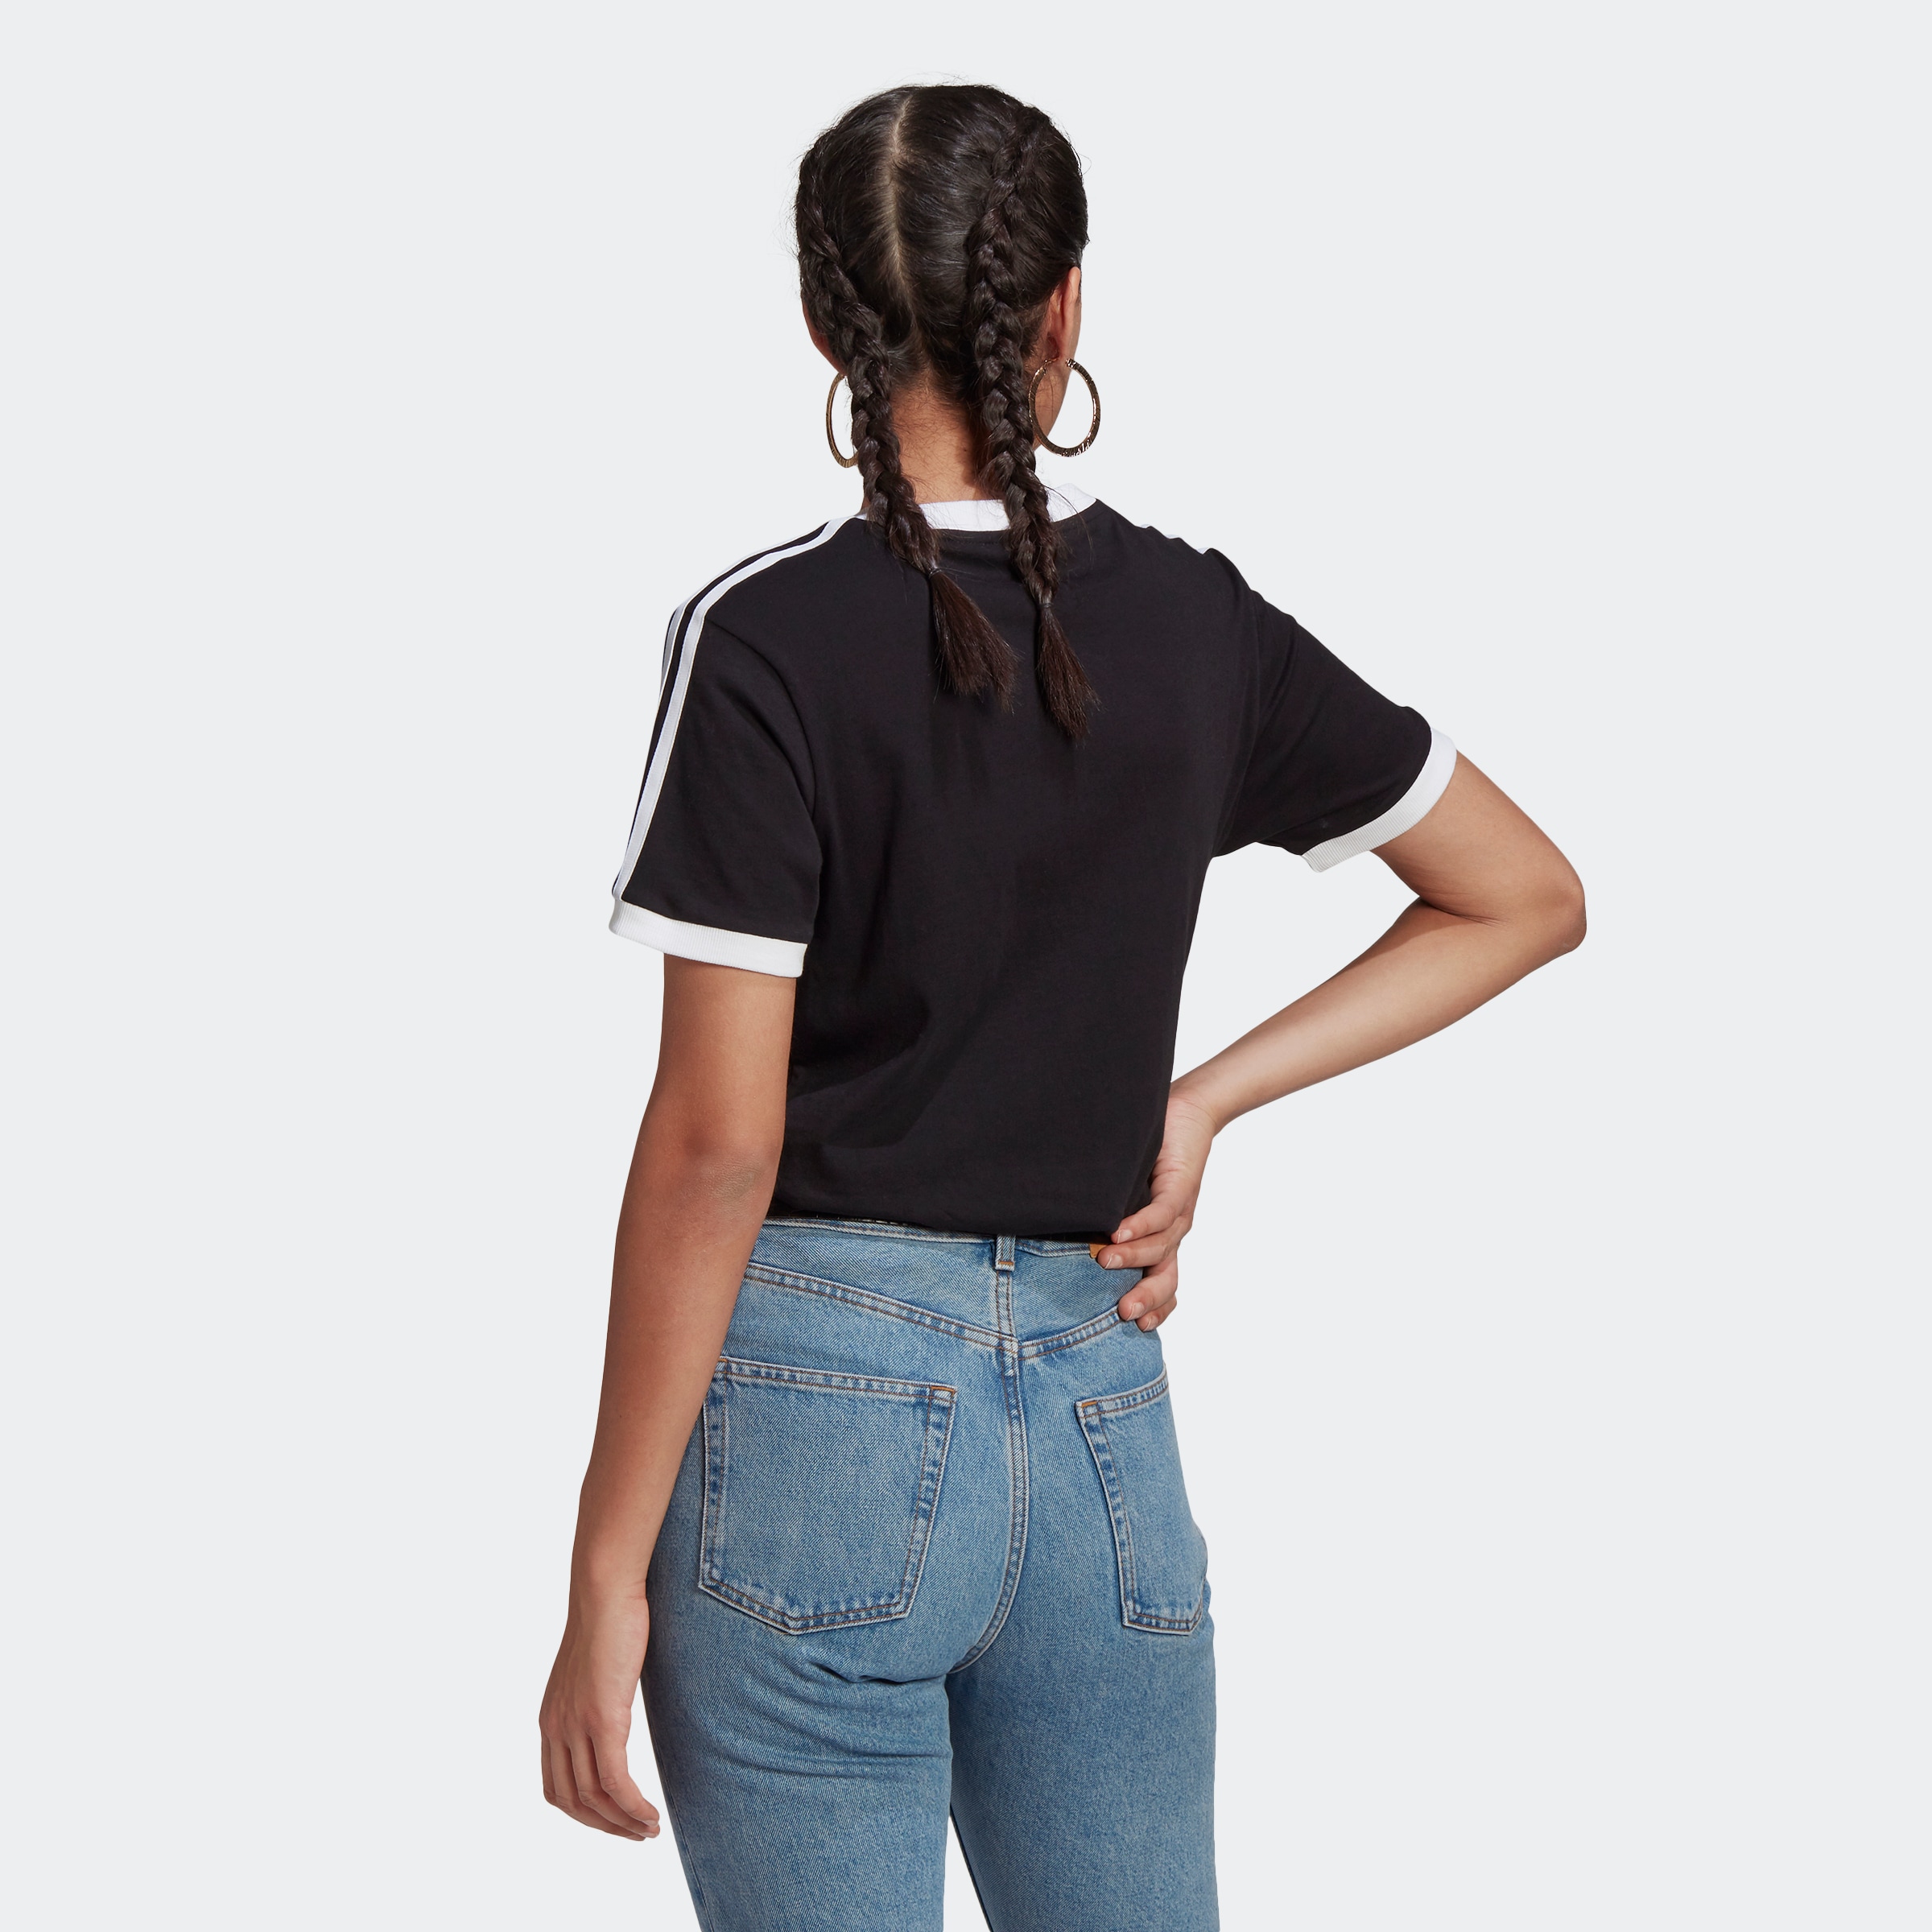 Adidas Originals 3 Stripes Kurzarm T-shirt 32 Black günstig online kaufen